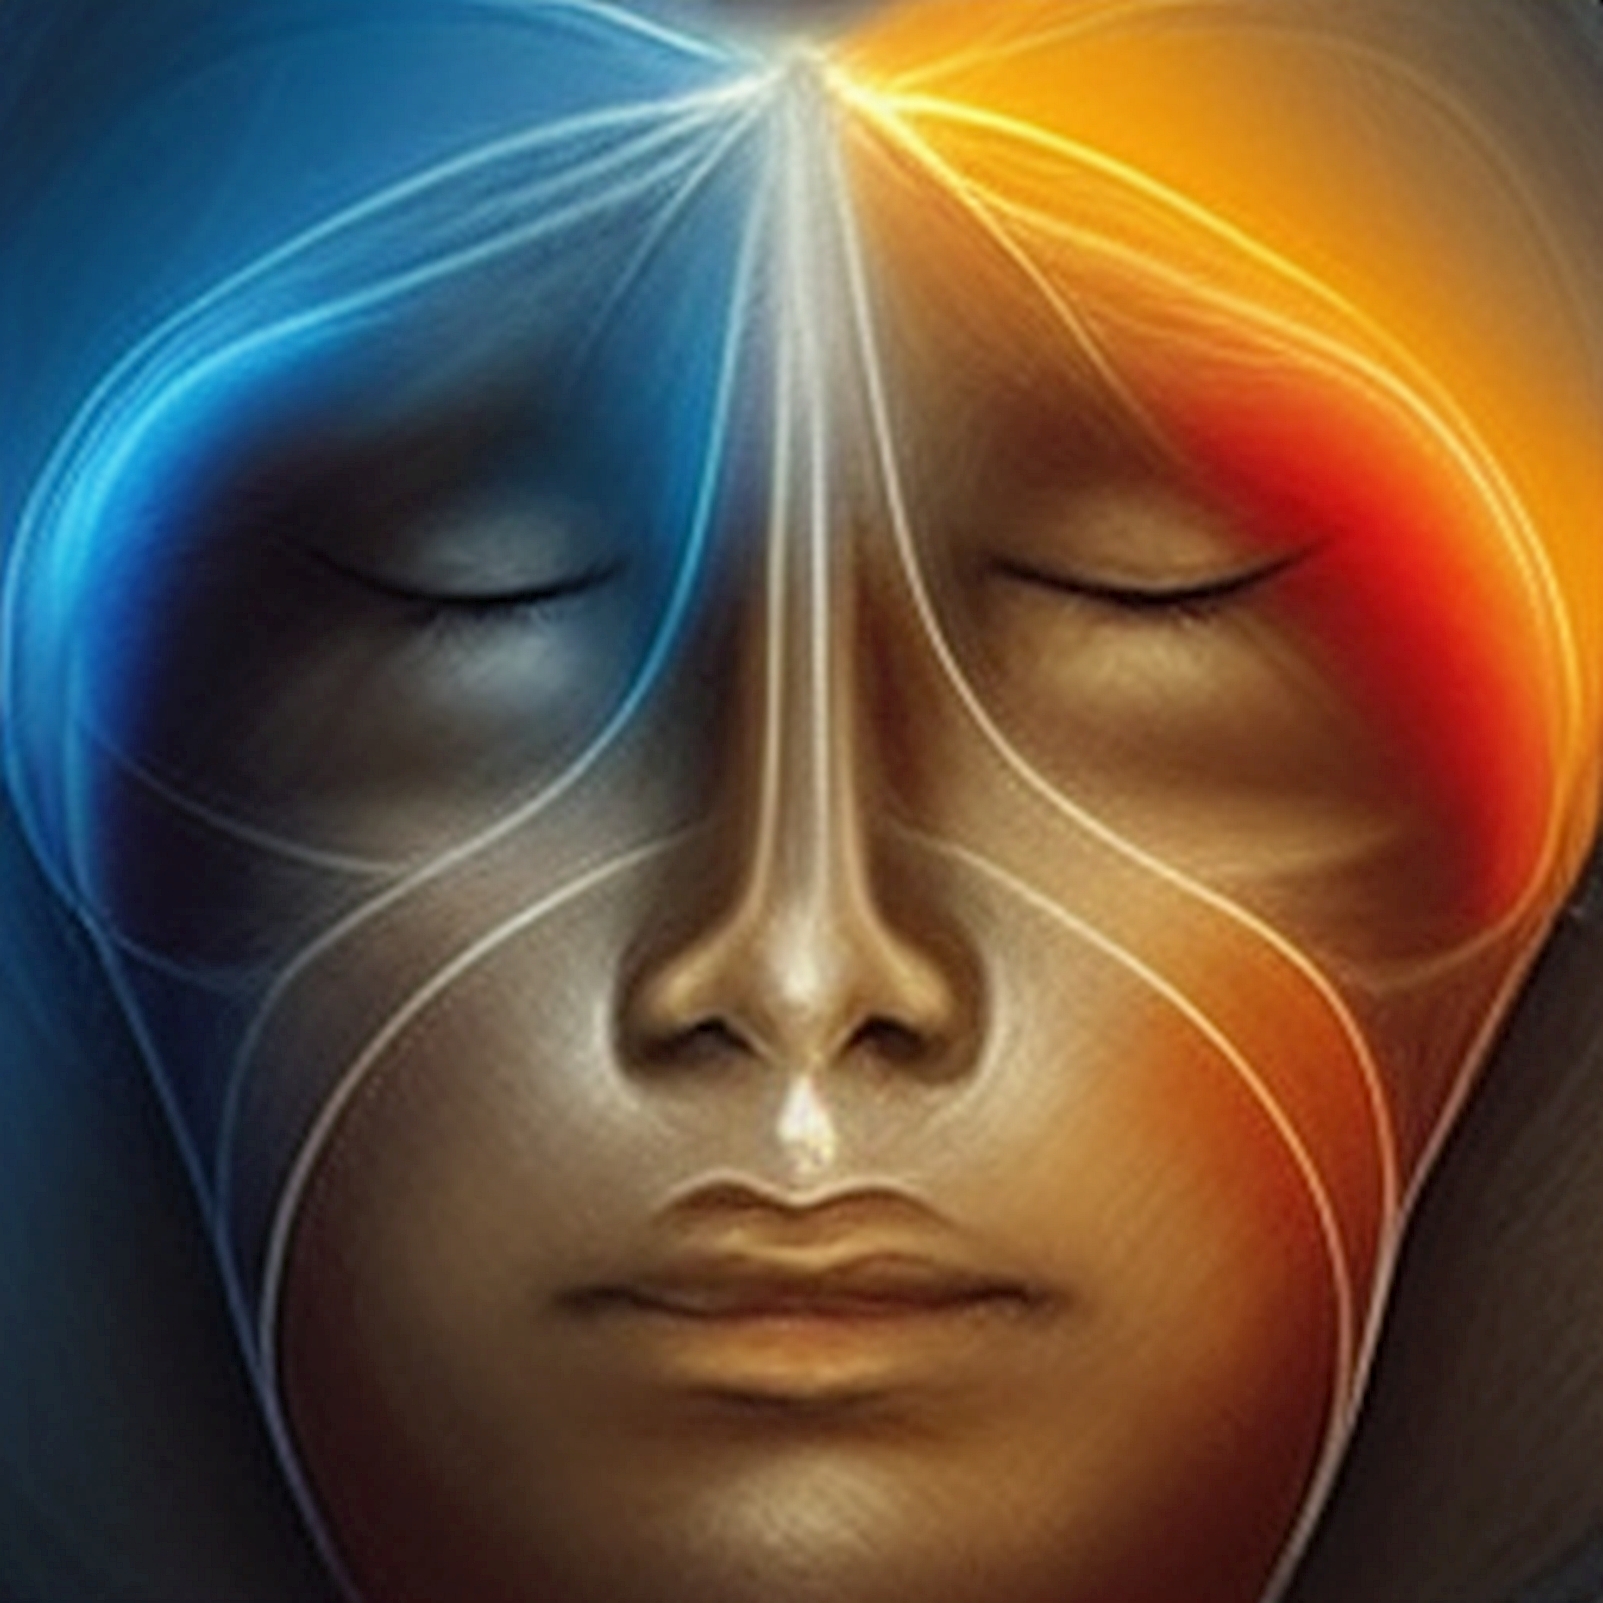 Migraine image for Dr Emmy blog post